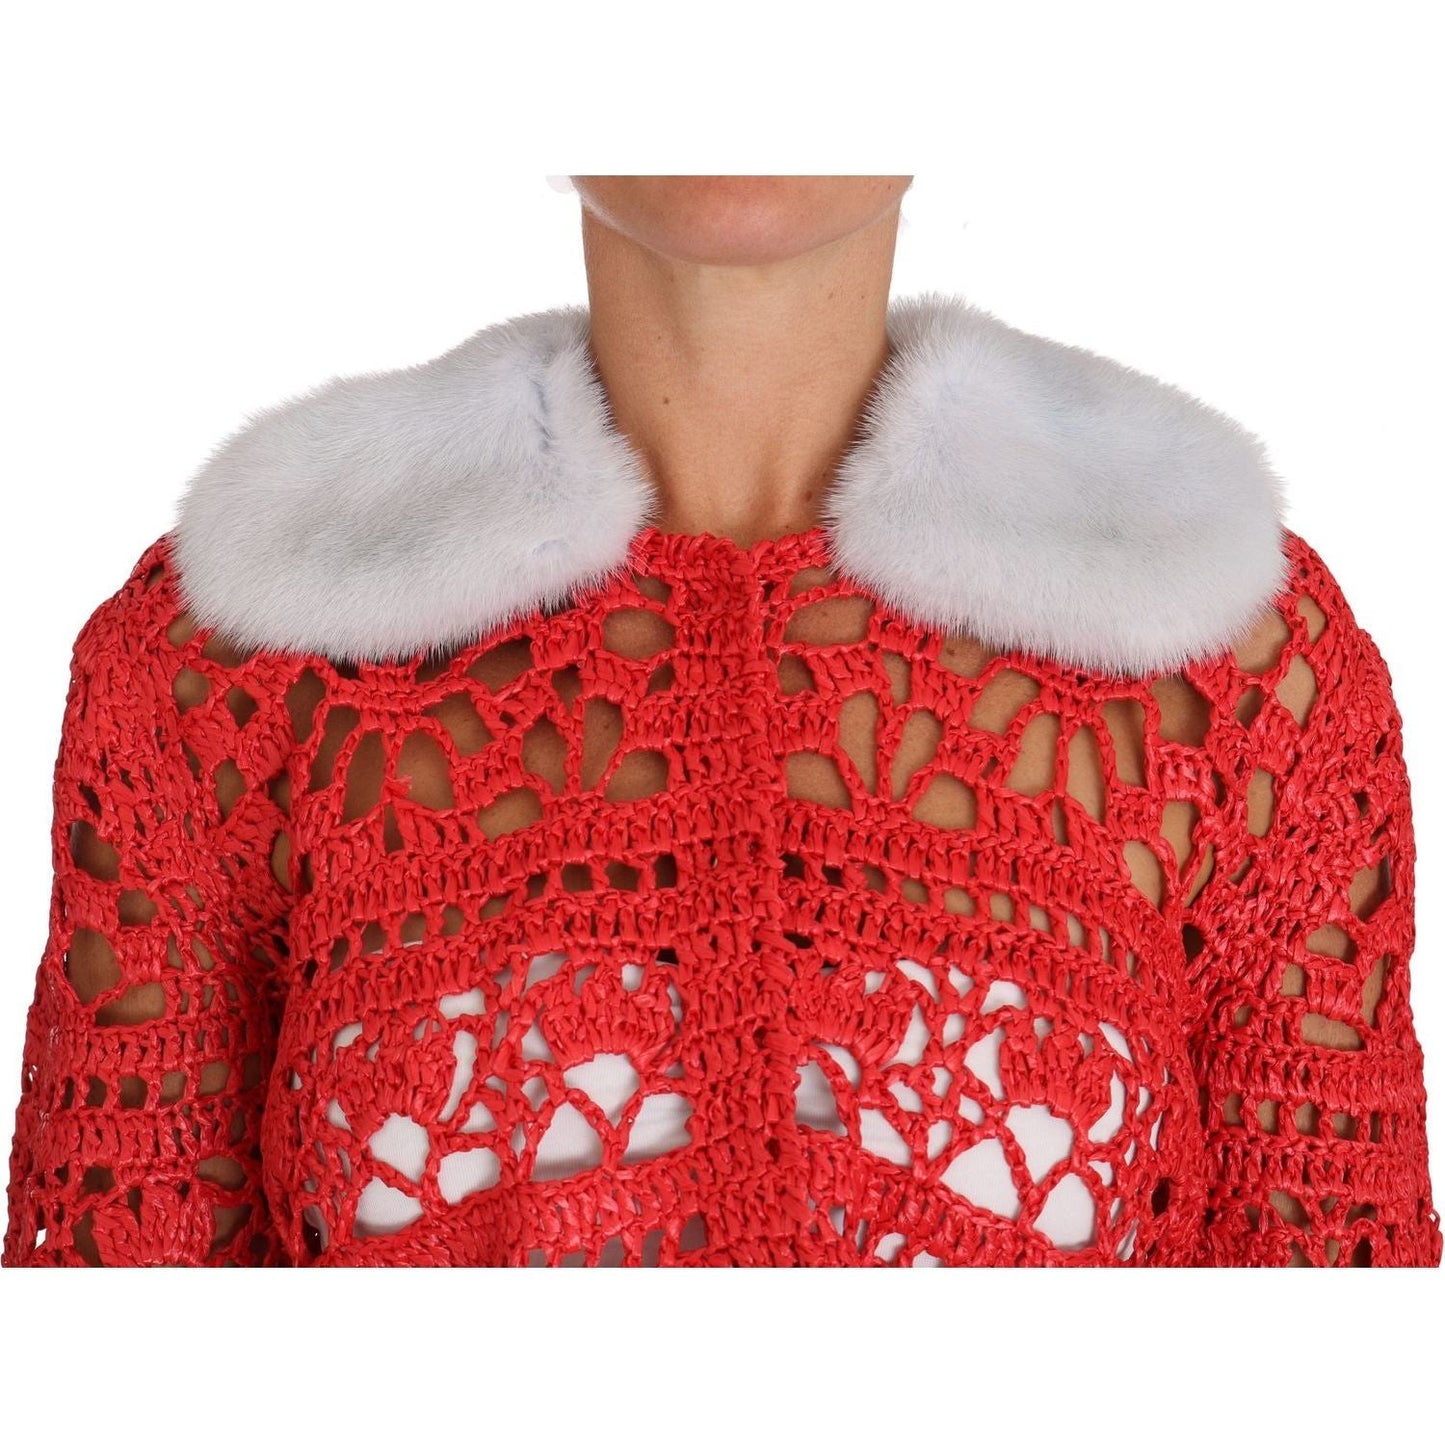 Dolce & Gabbana Elegant Red Crochet Knit Cardigan with Fur Collar red-cardigan-crochet-knit-raffia-sweater 648775-red-cardigan-crochet-knit-raffia-sweater-2.jpg